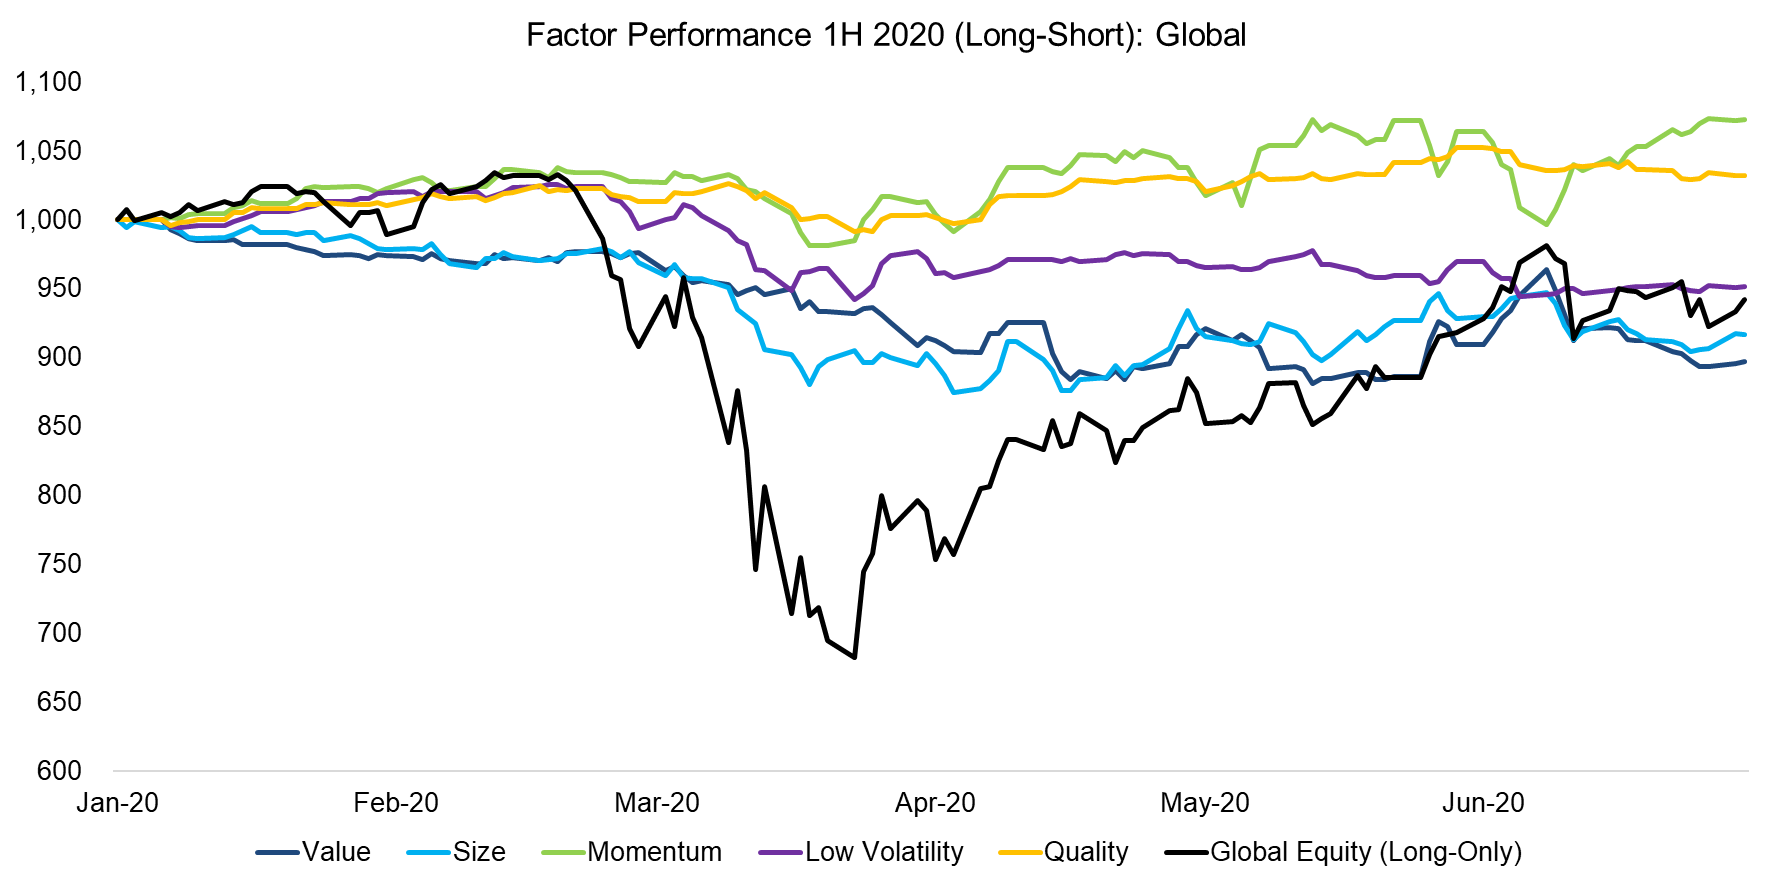 Factor Performance 1H 2020 (Long-Short) Global